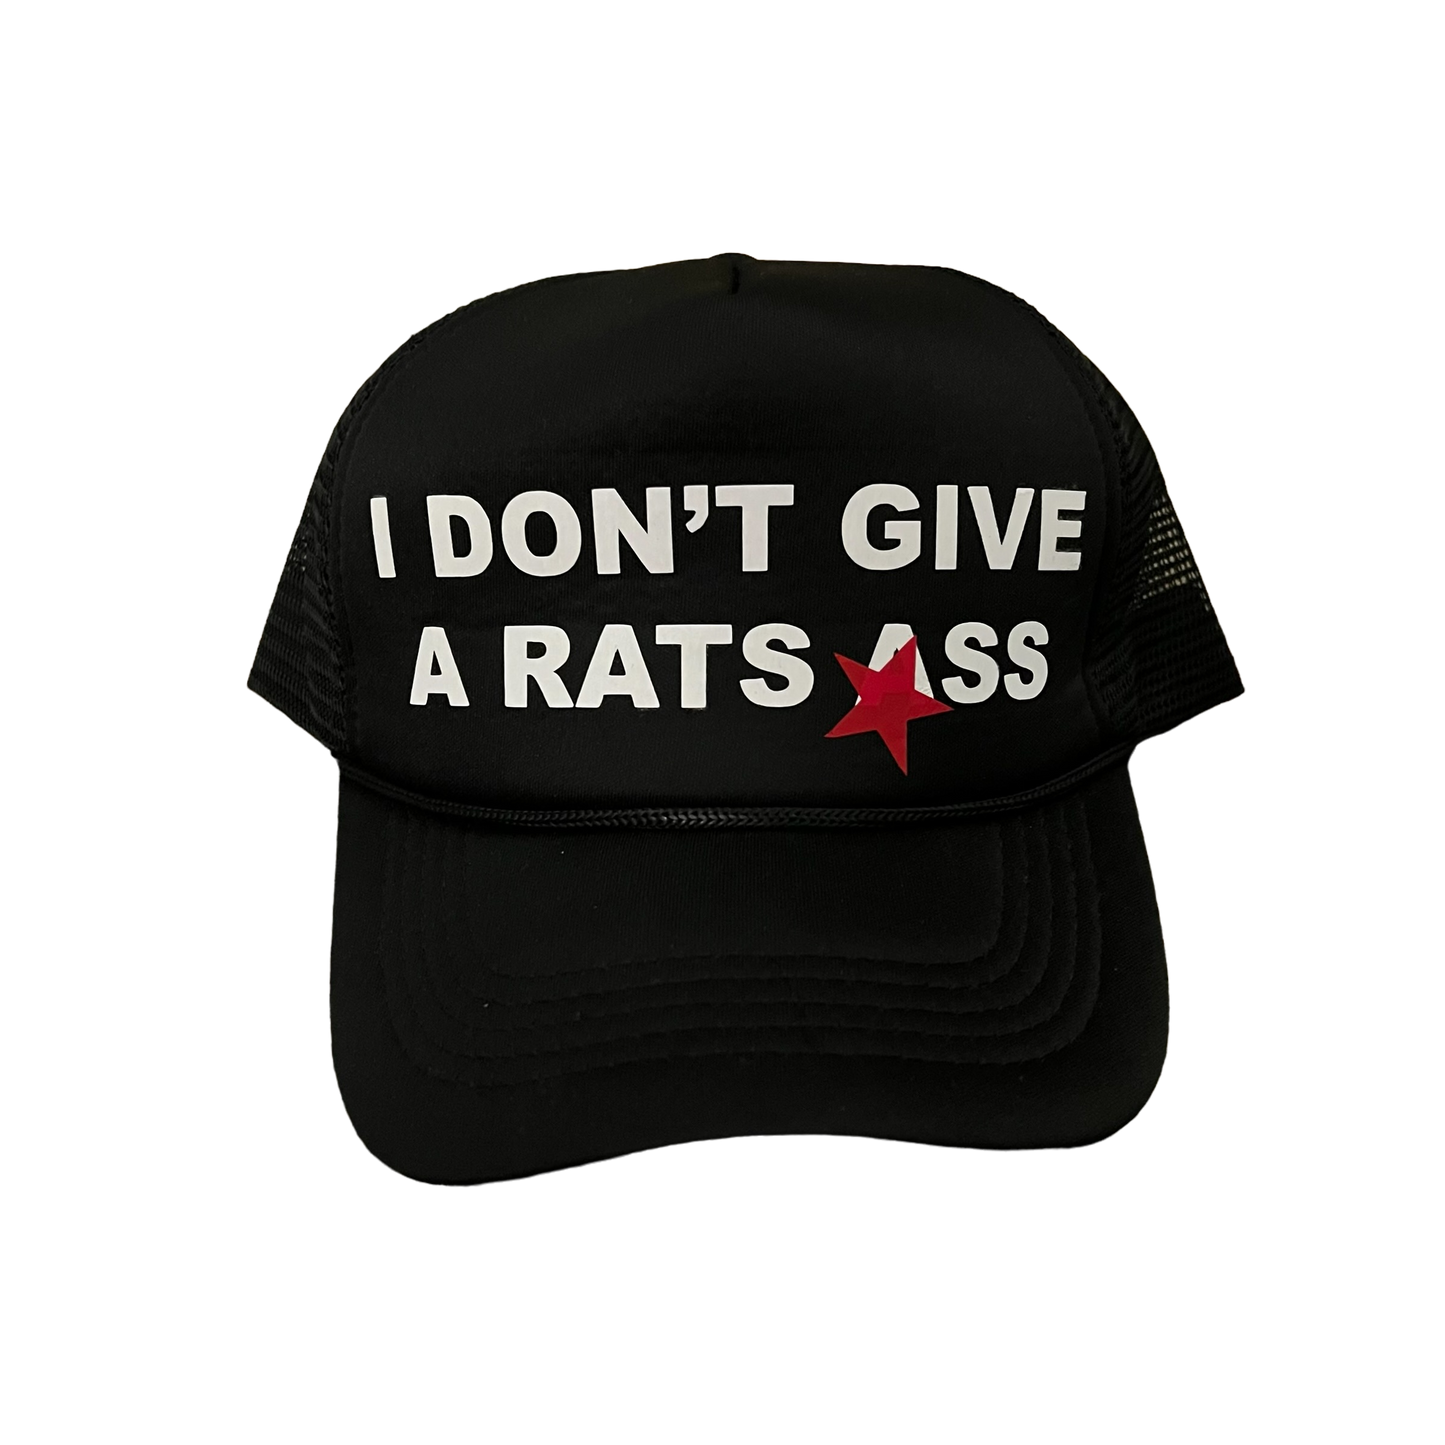 Rats *ss Trucker